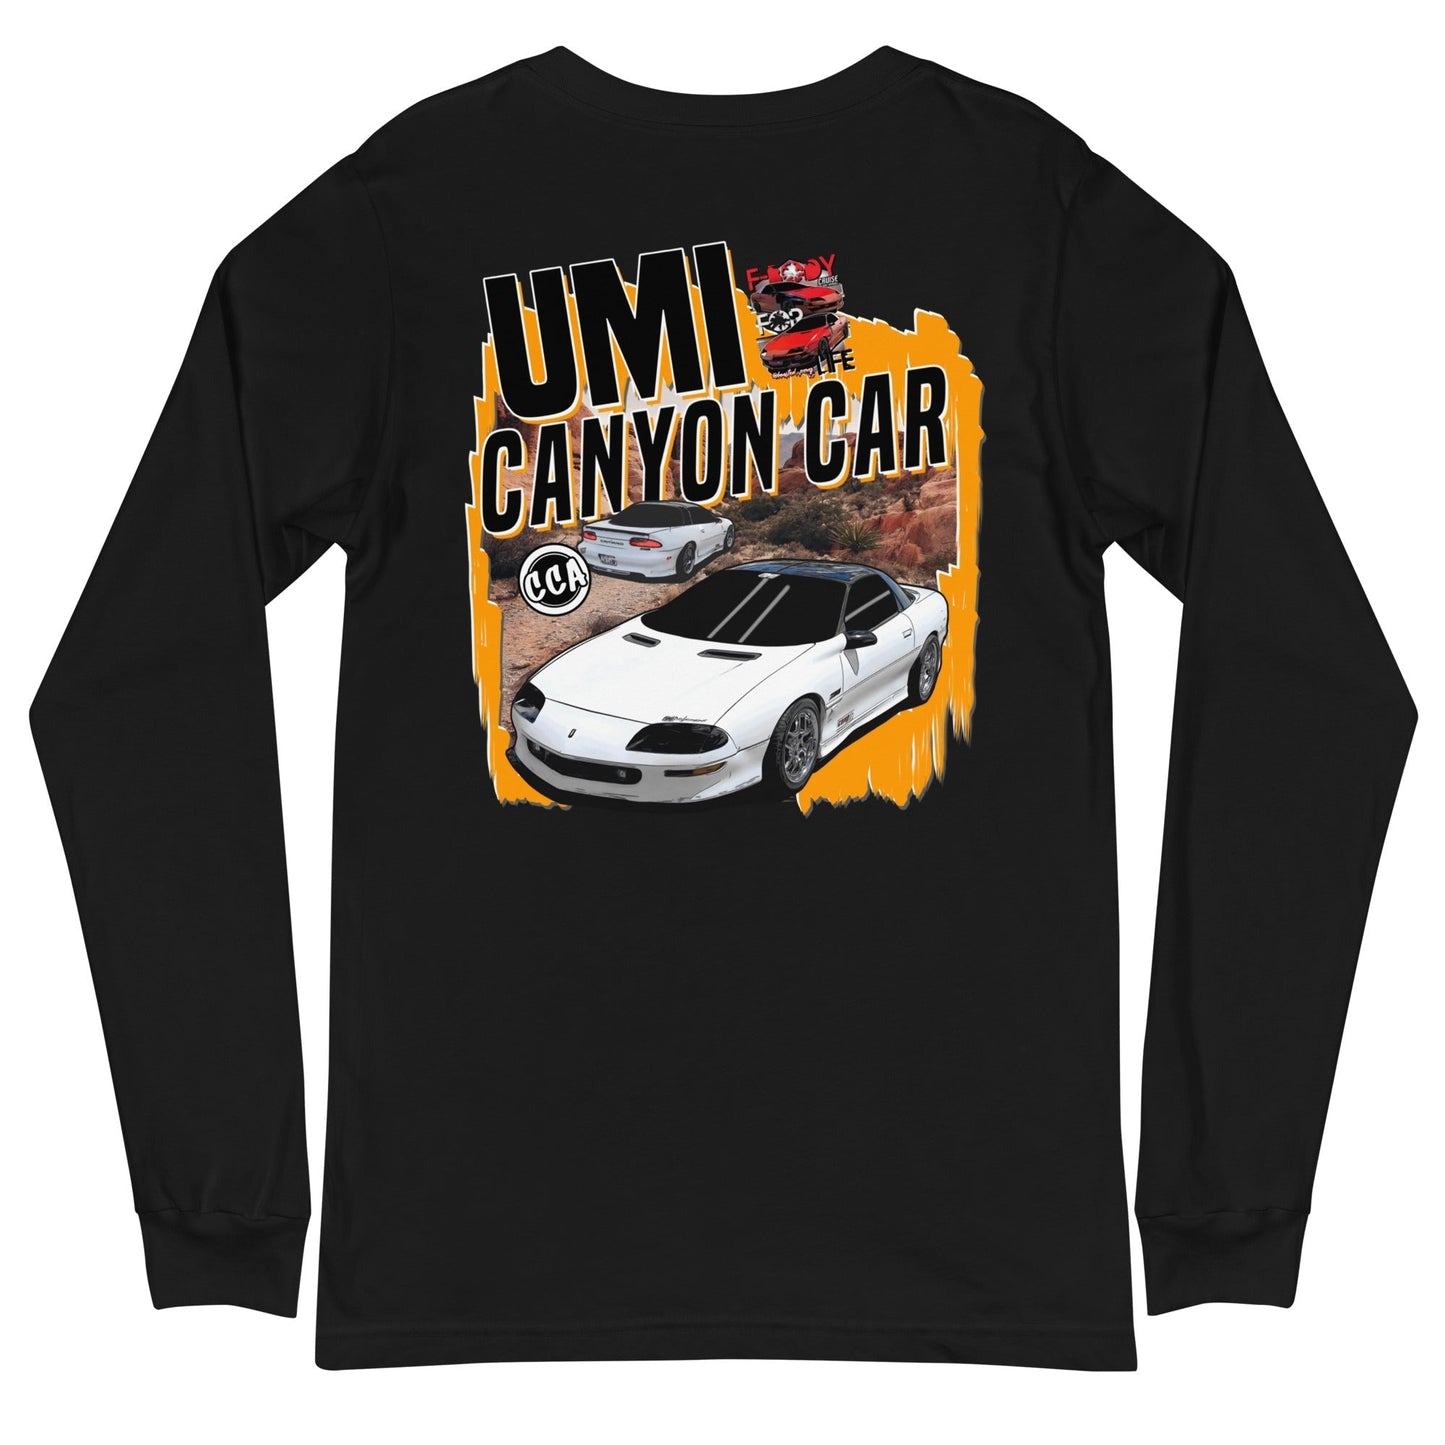 UMI Canyon Car Long Sleeve Tee